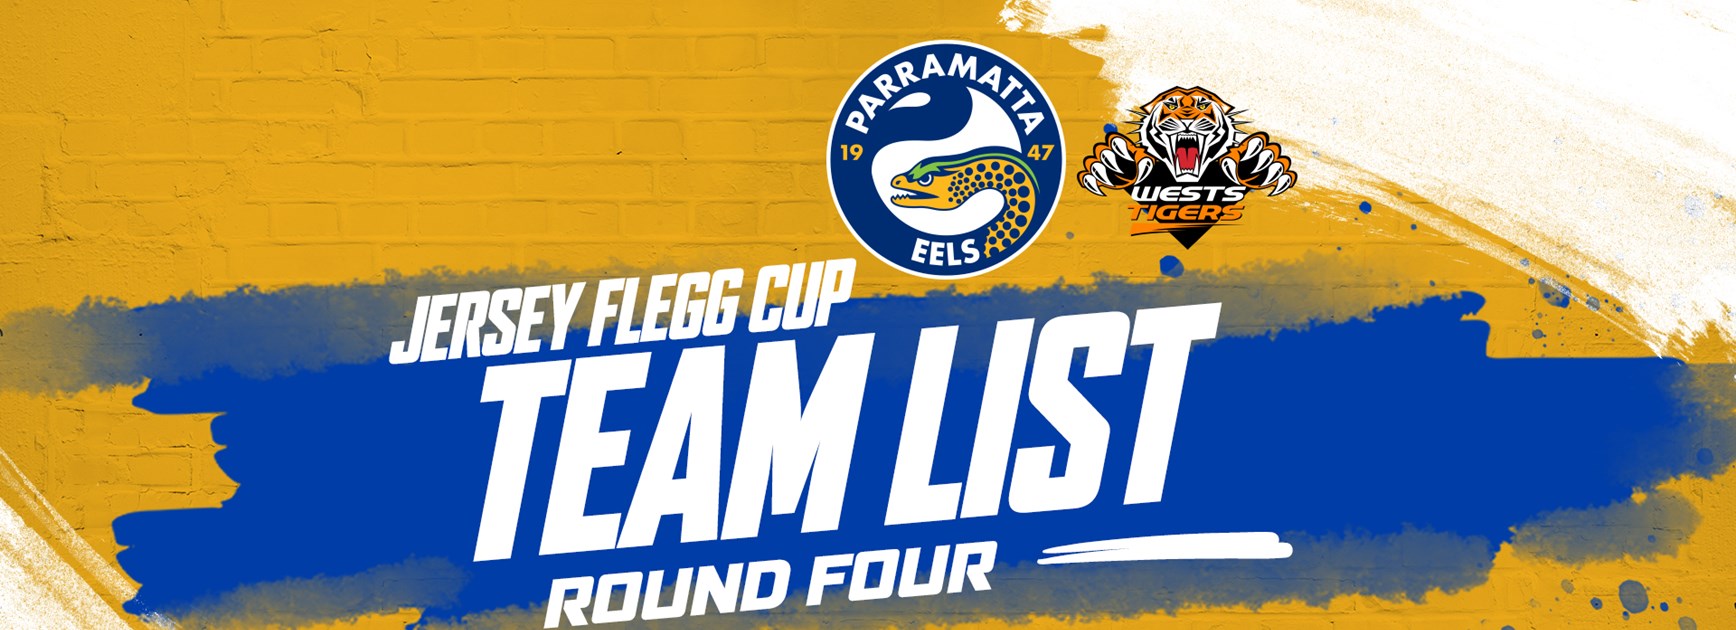 Jersey Flegg Team List - Tigers v Eels, Round Four